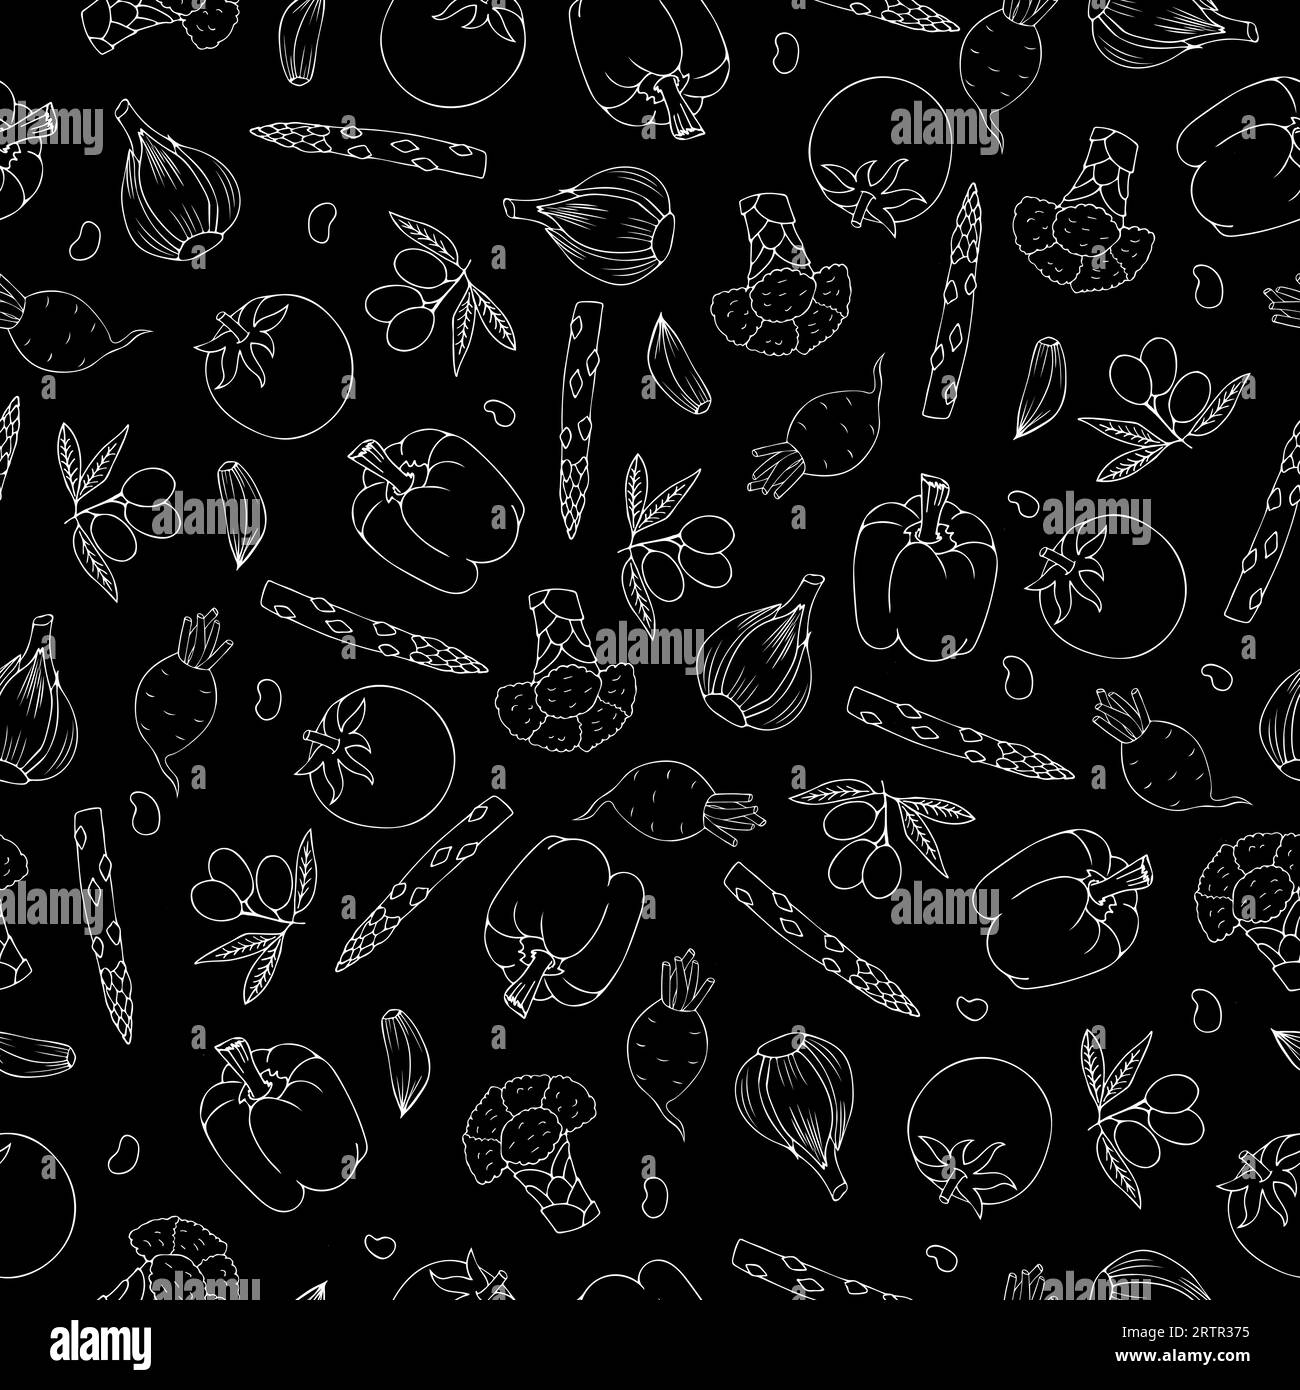 Vegetables pattern on black. Hand-drawn doodle vector seamless pattern of vegetables, metaphor of healthy eating. Stock Vector